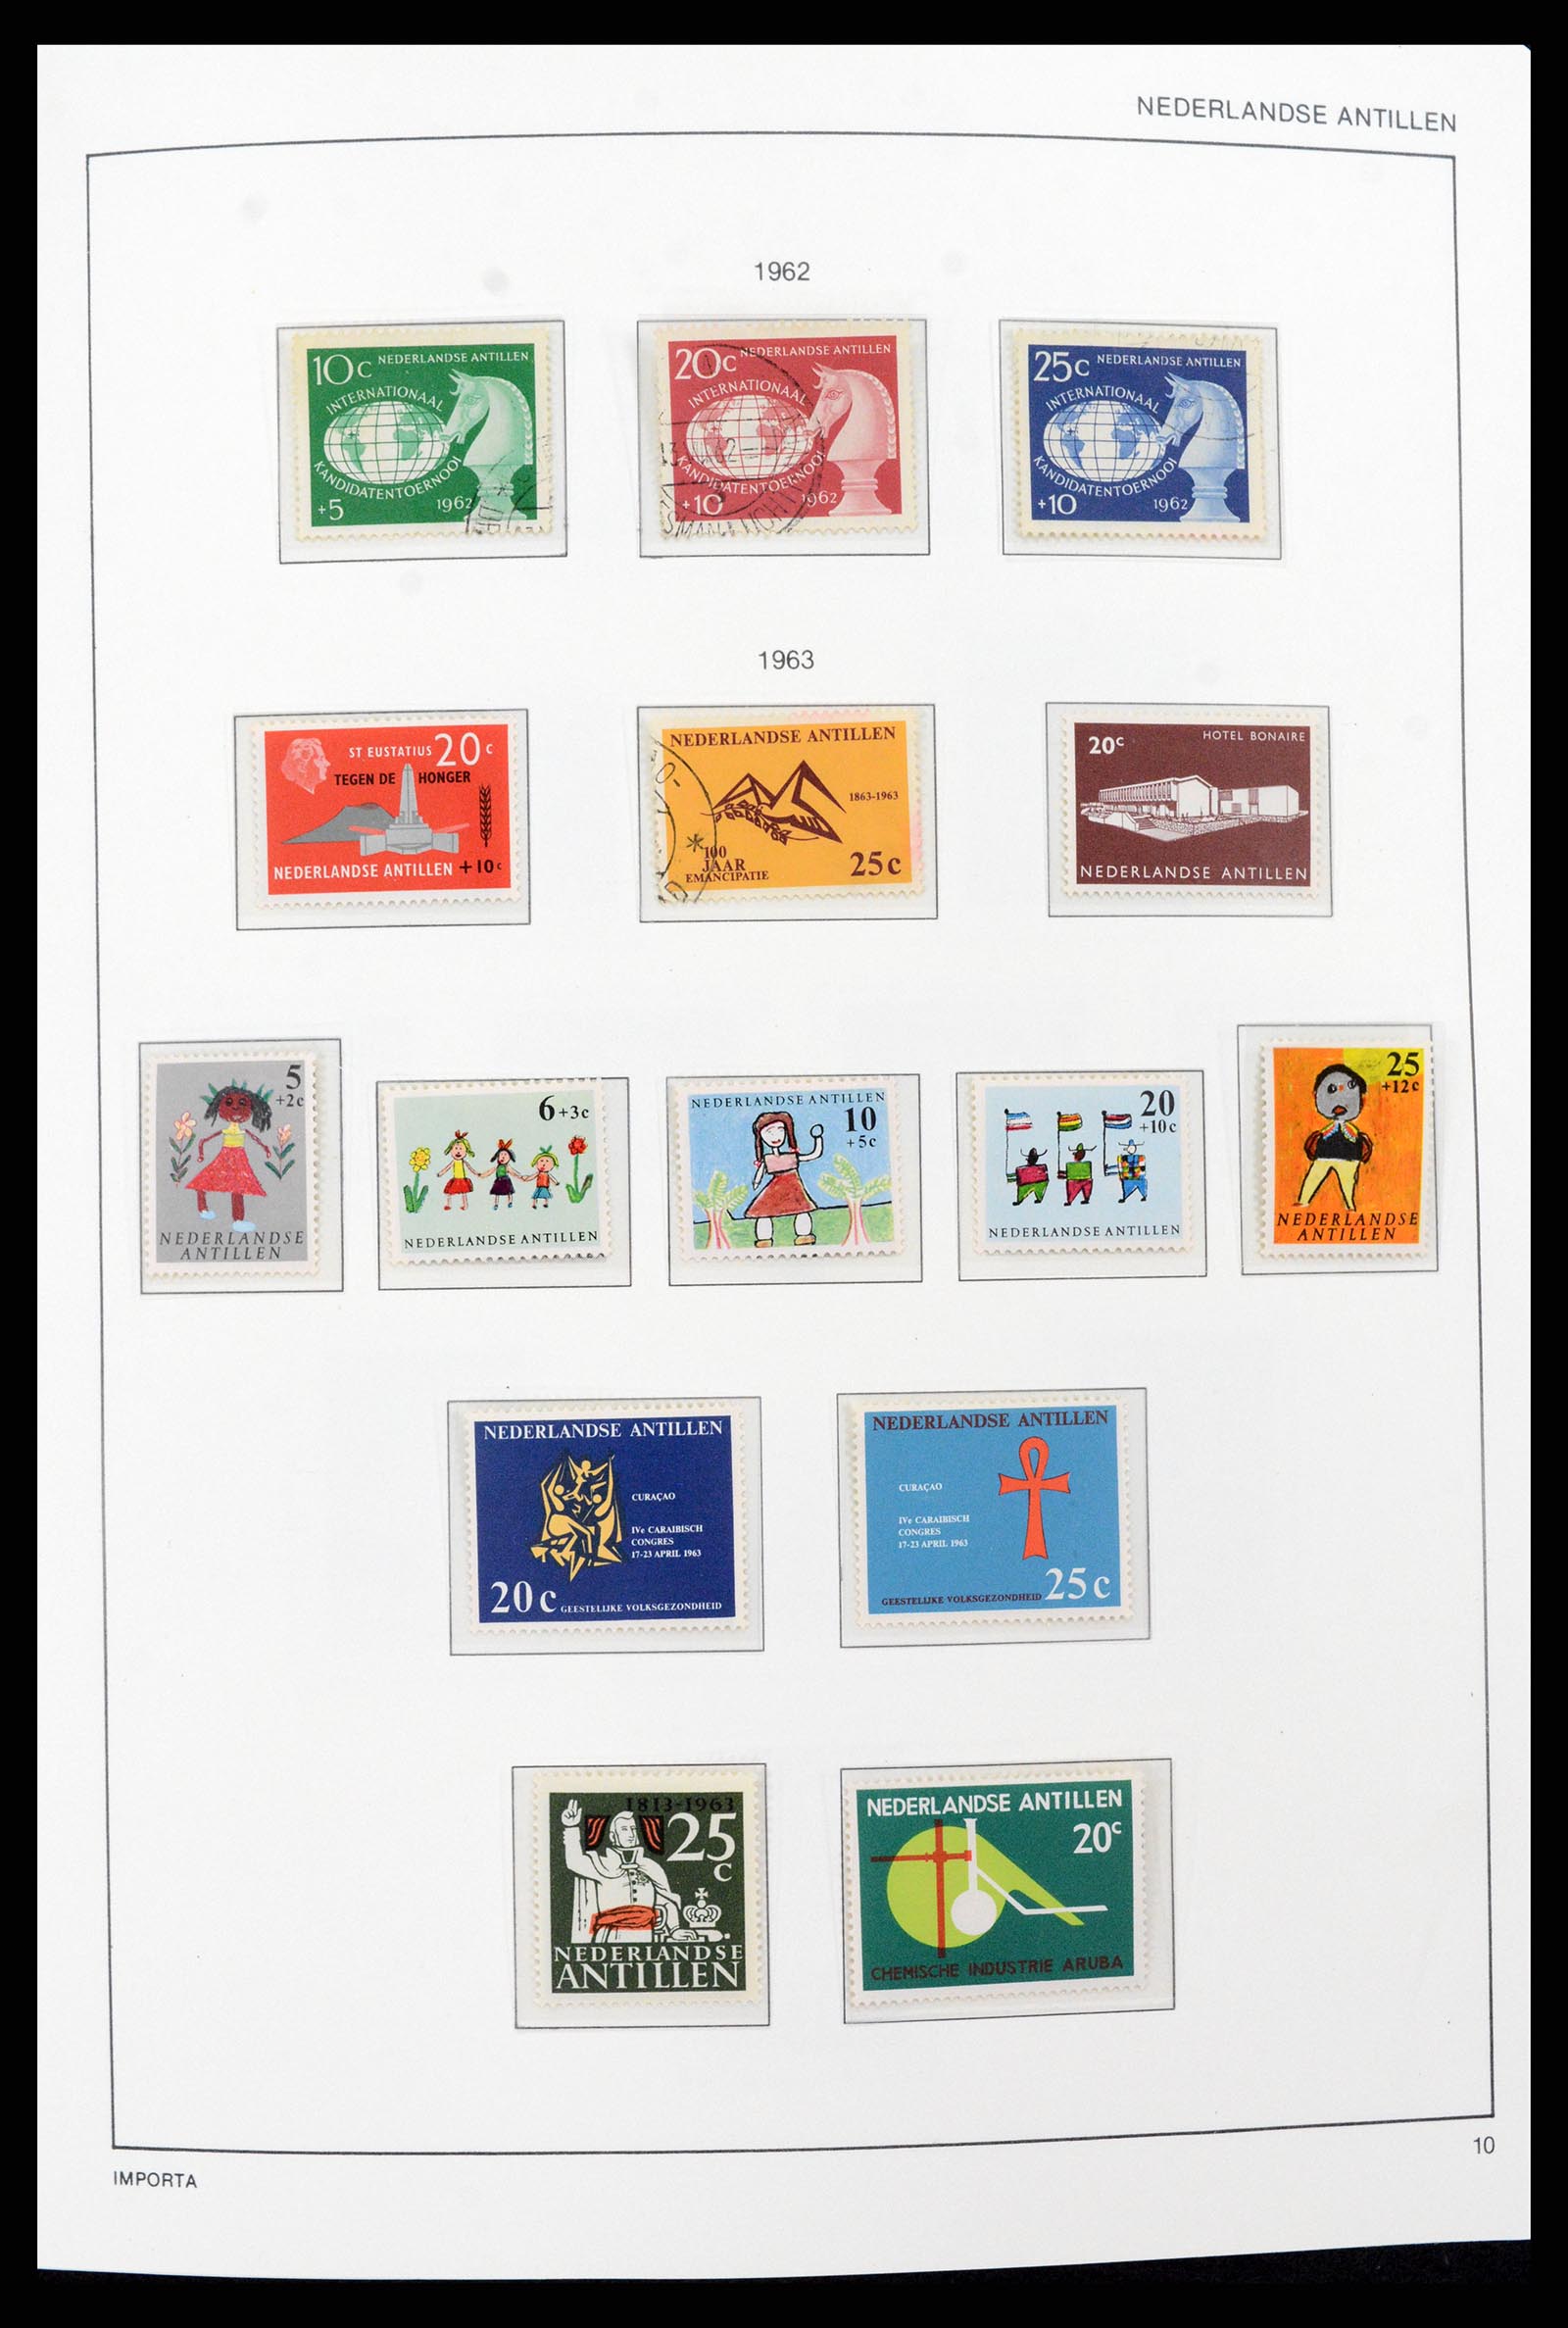 37693 010 - Stamp collection 37693 Netherlands Antilles 1949-2001.